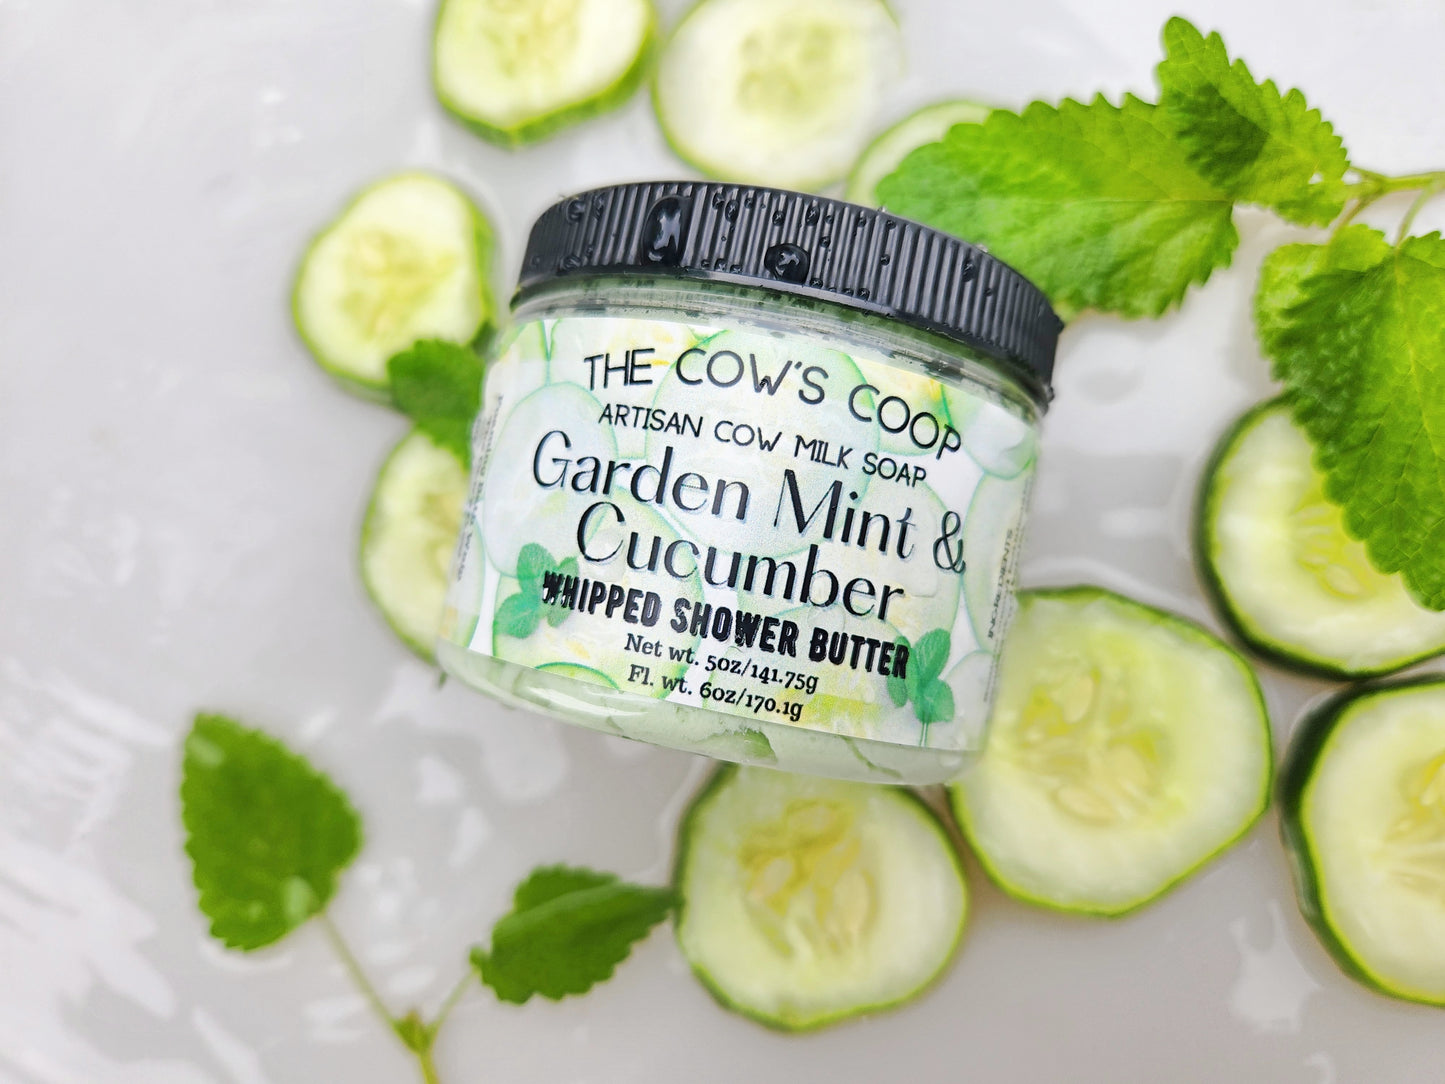 Garden Mint and Cucumber - Whipped Shower Butter Cow Milk Soap